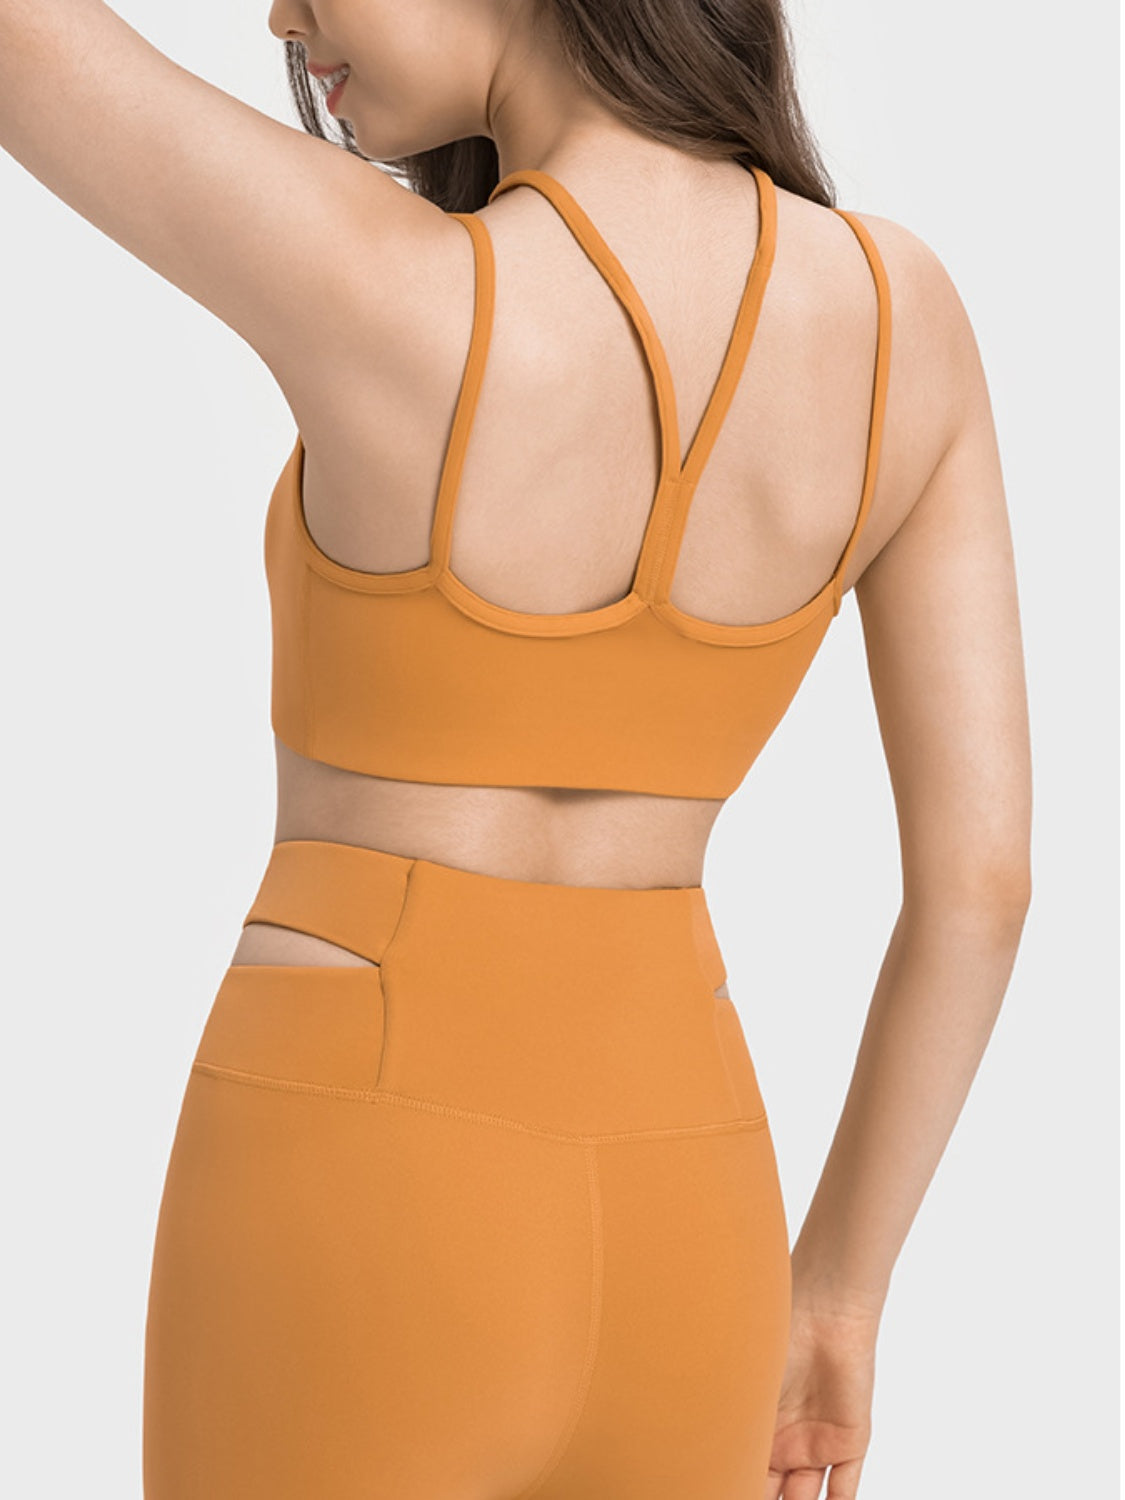 Yoga Top Women's Sports Bra Double-Strap Cropped Sports Spaghetti Strap Sleeveless Cami